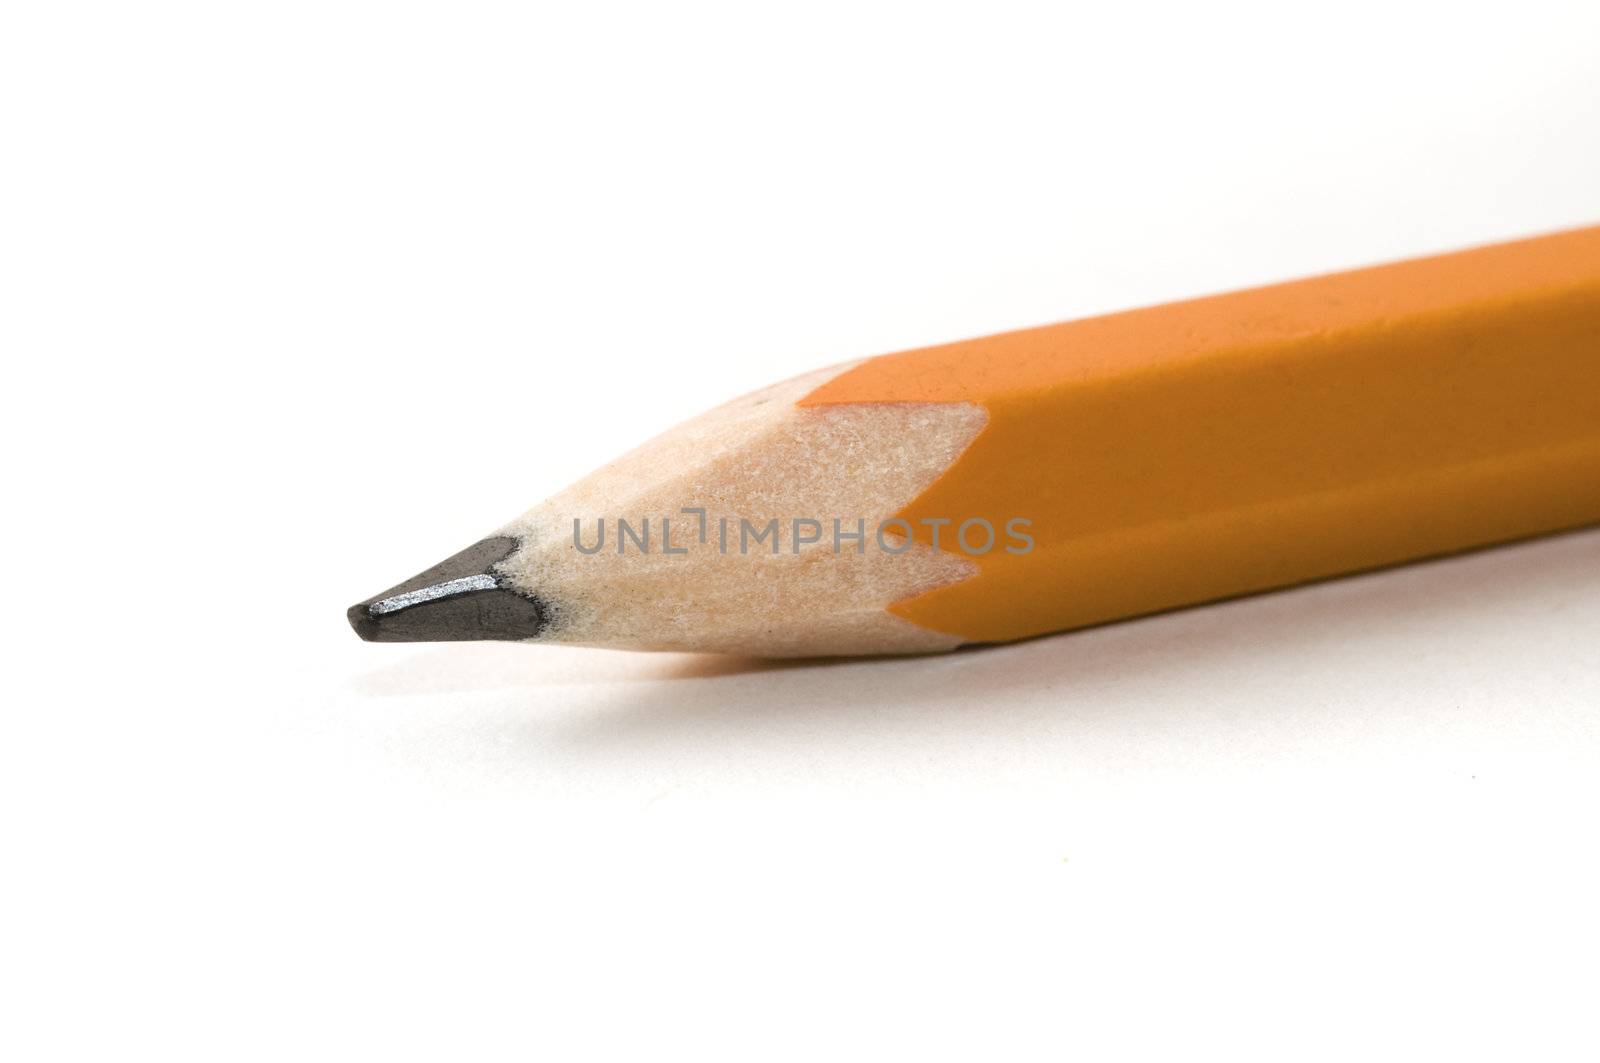 Sharp Pencil by Gordo25